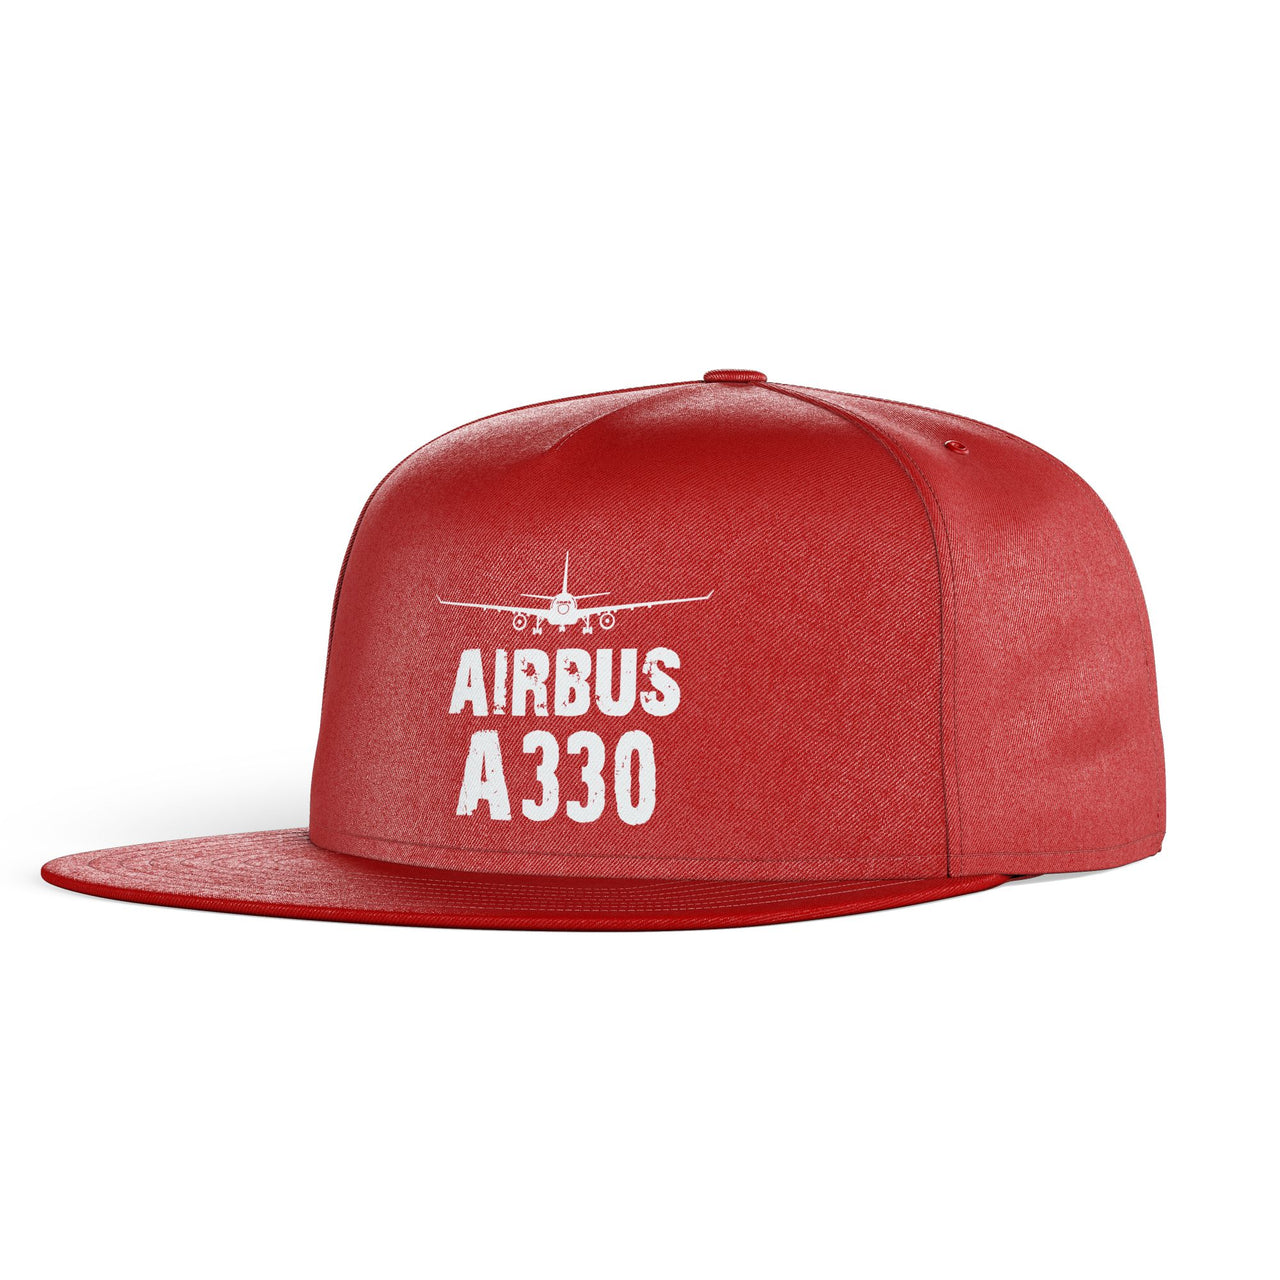 Airbus A330 & Plane Designed Snapback Caps & Hats